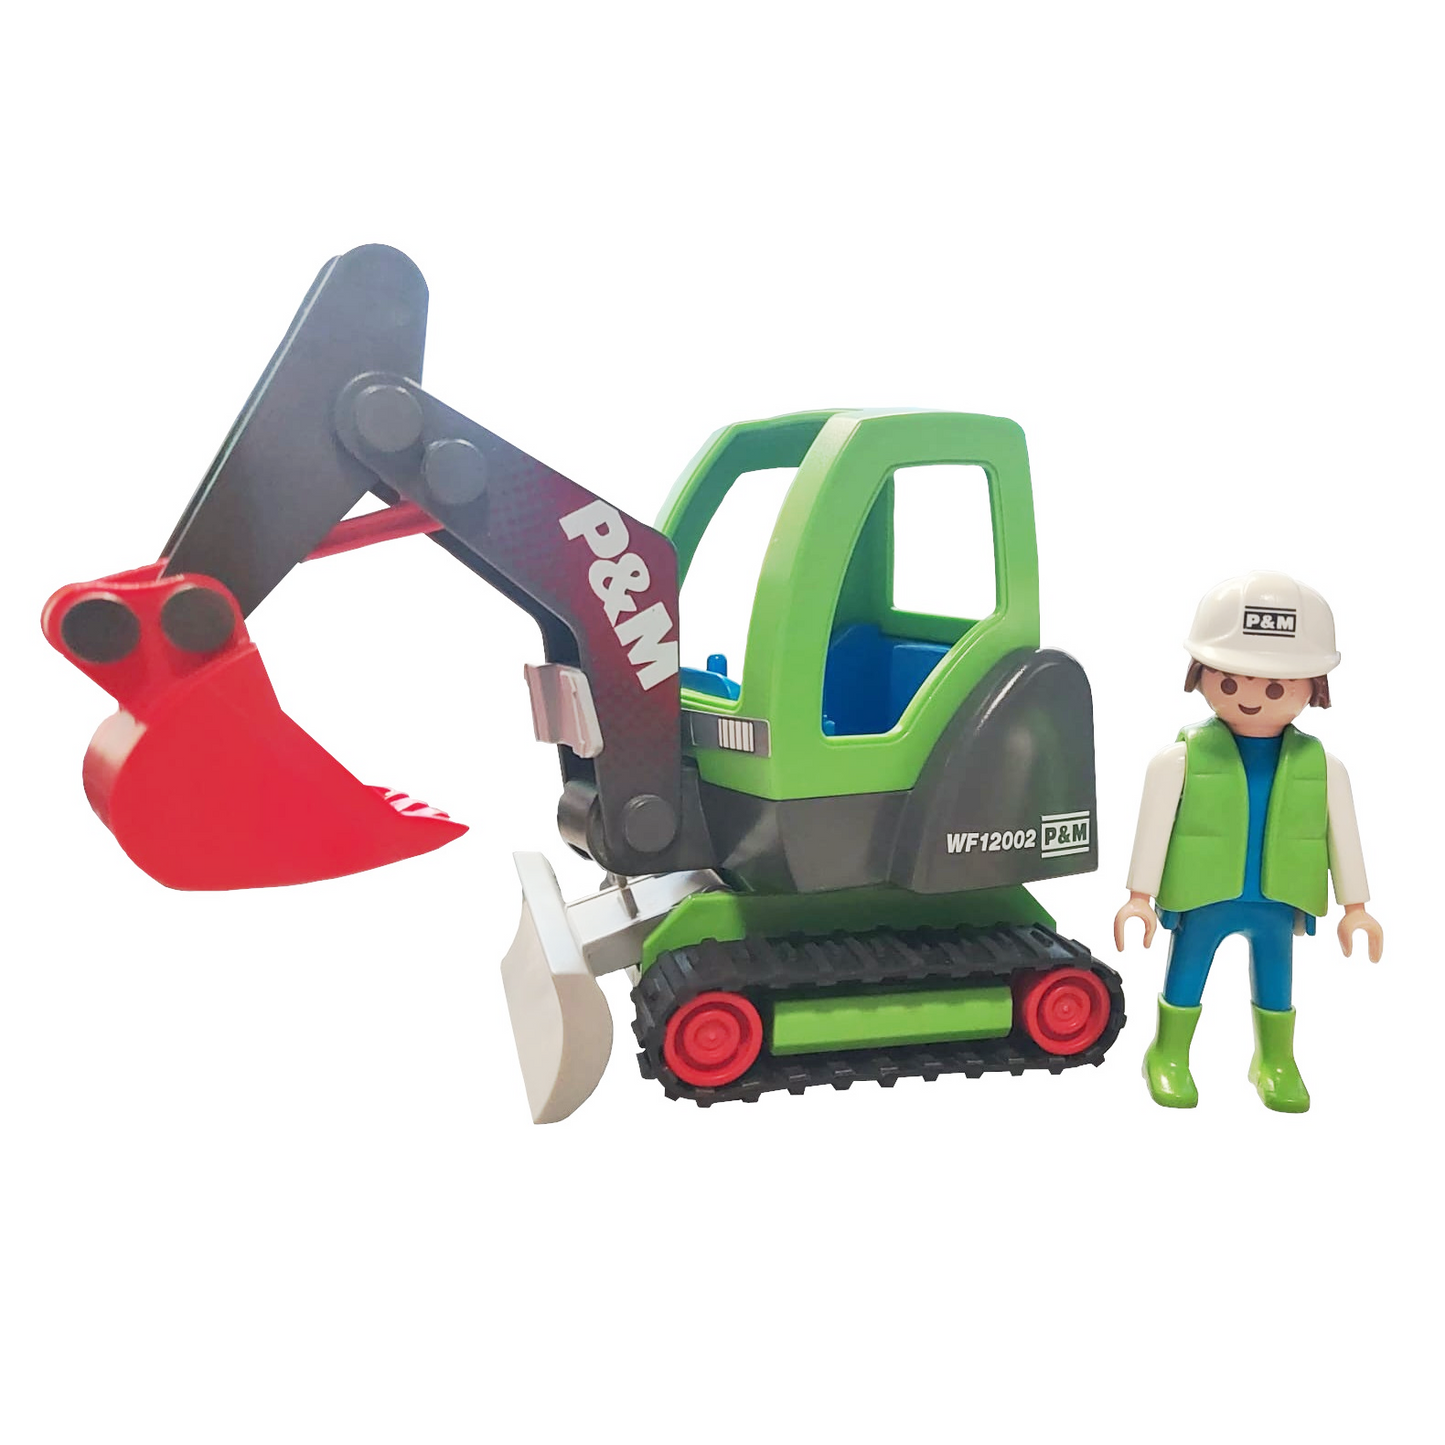 Playmobil 3279 - Minibagger mit Bauarbeiter P&M Baustelle Zubehör